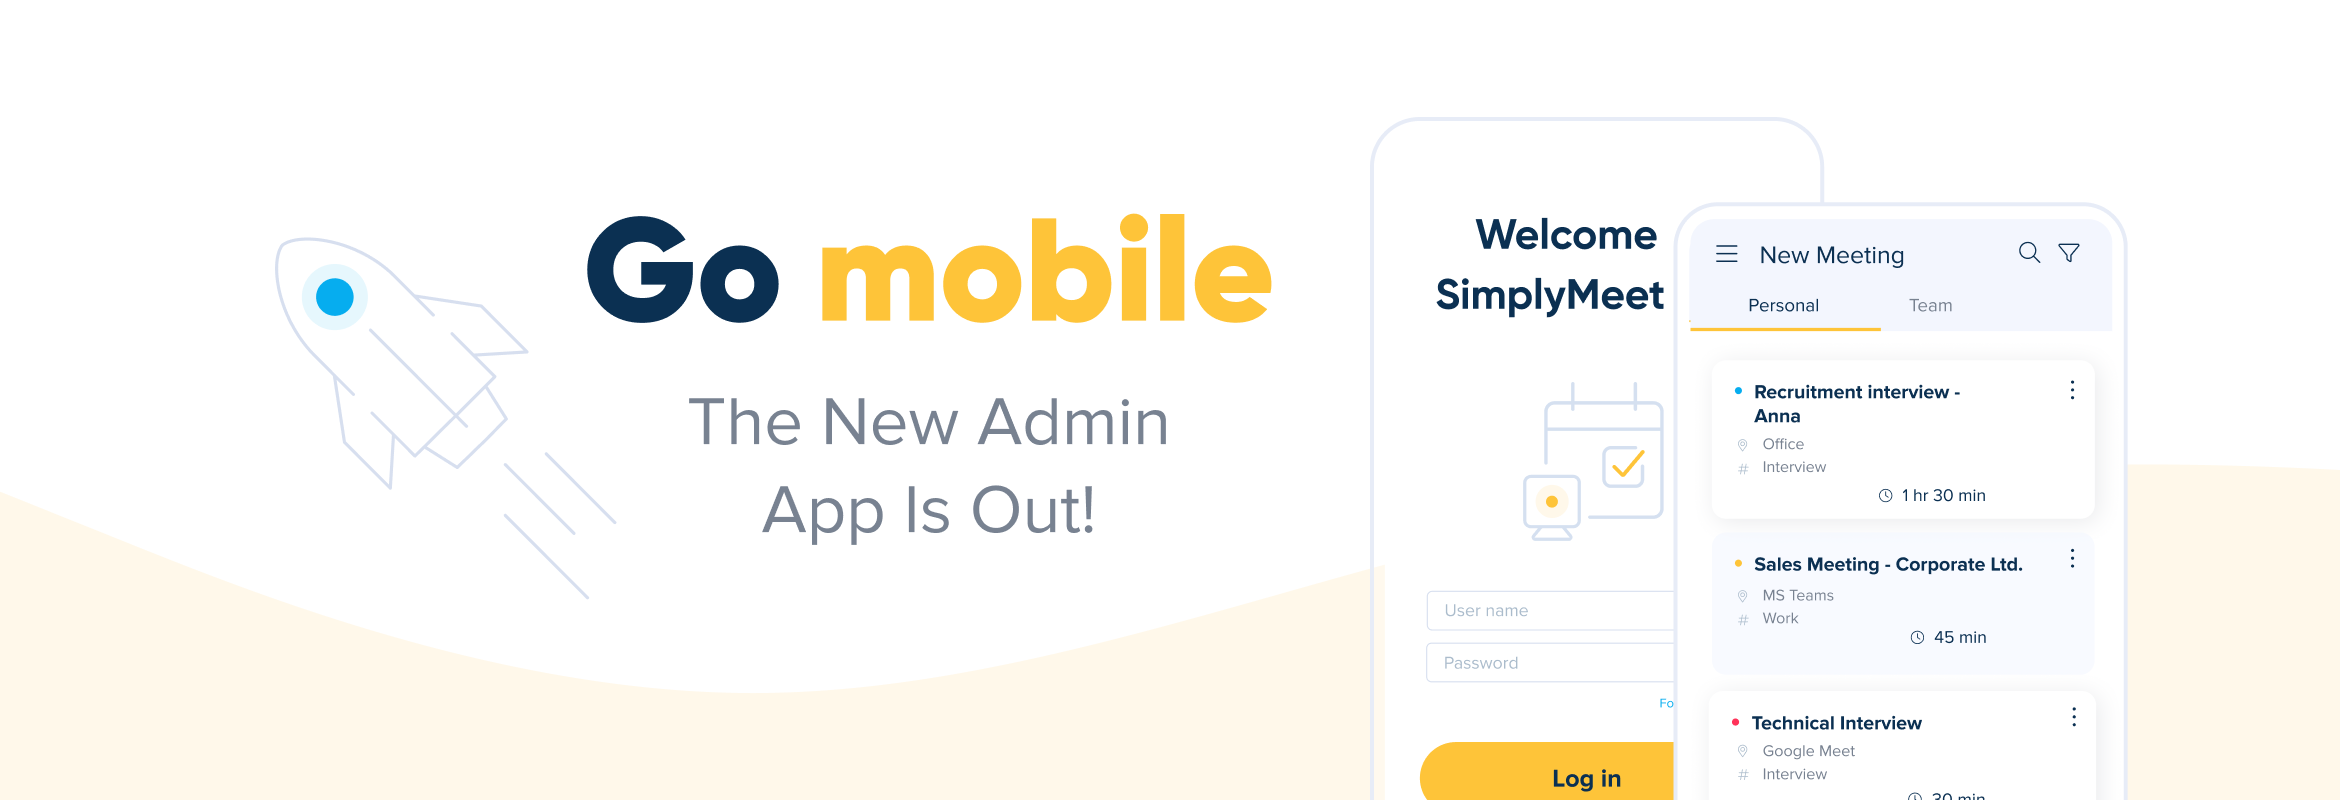 SimplyMeet.me Mobile Admin App